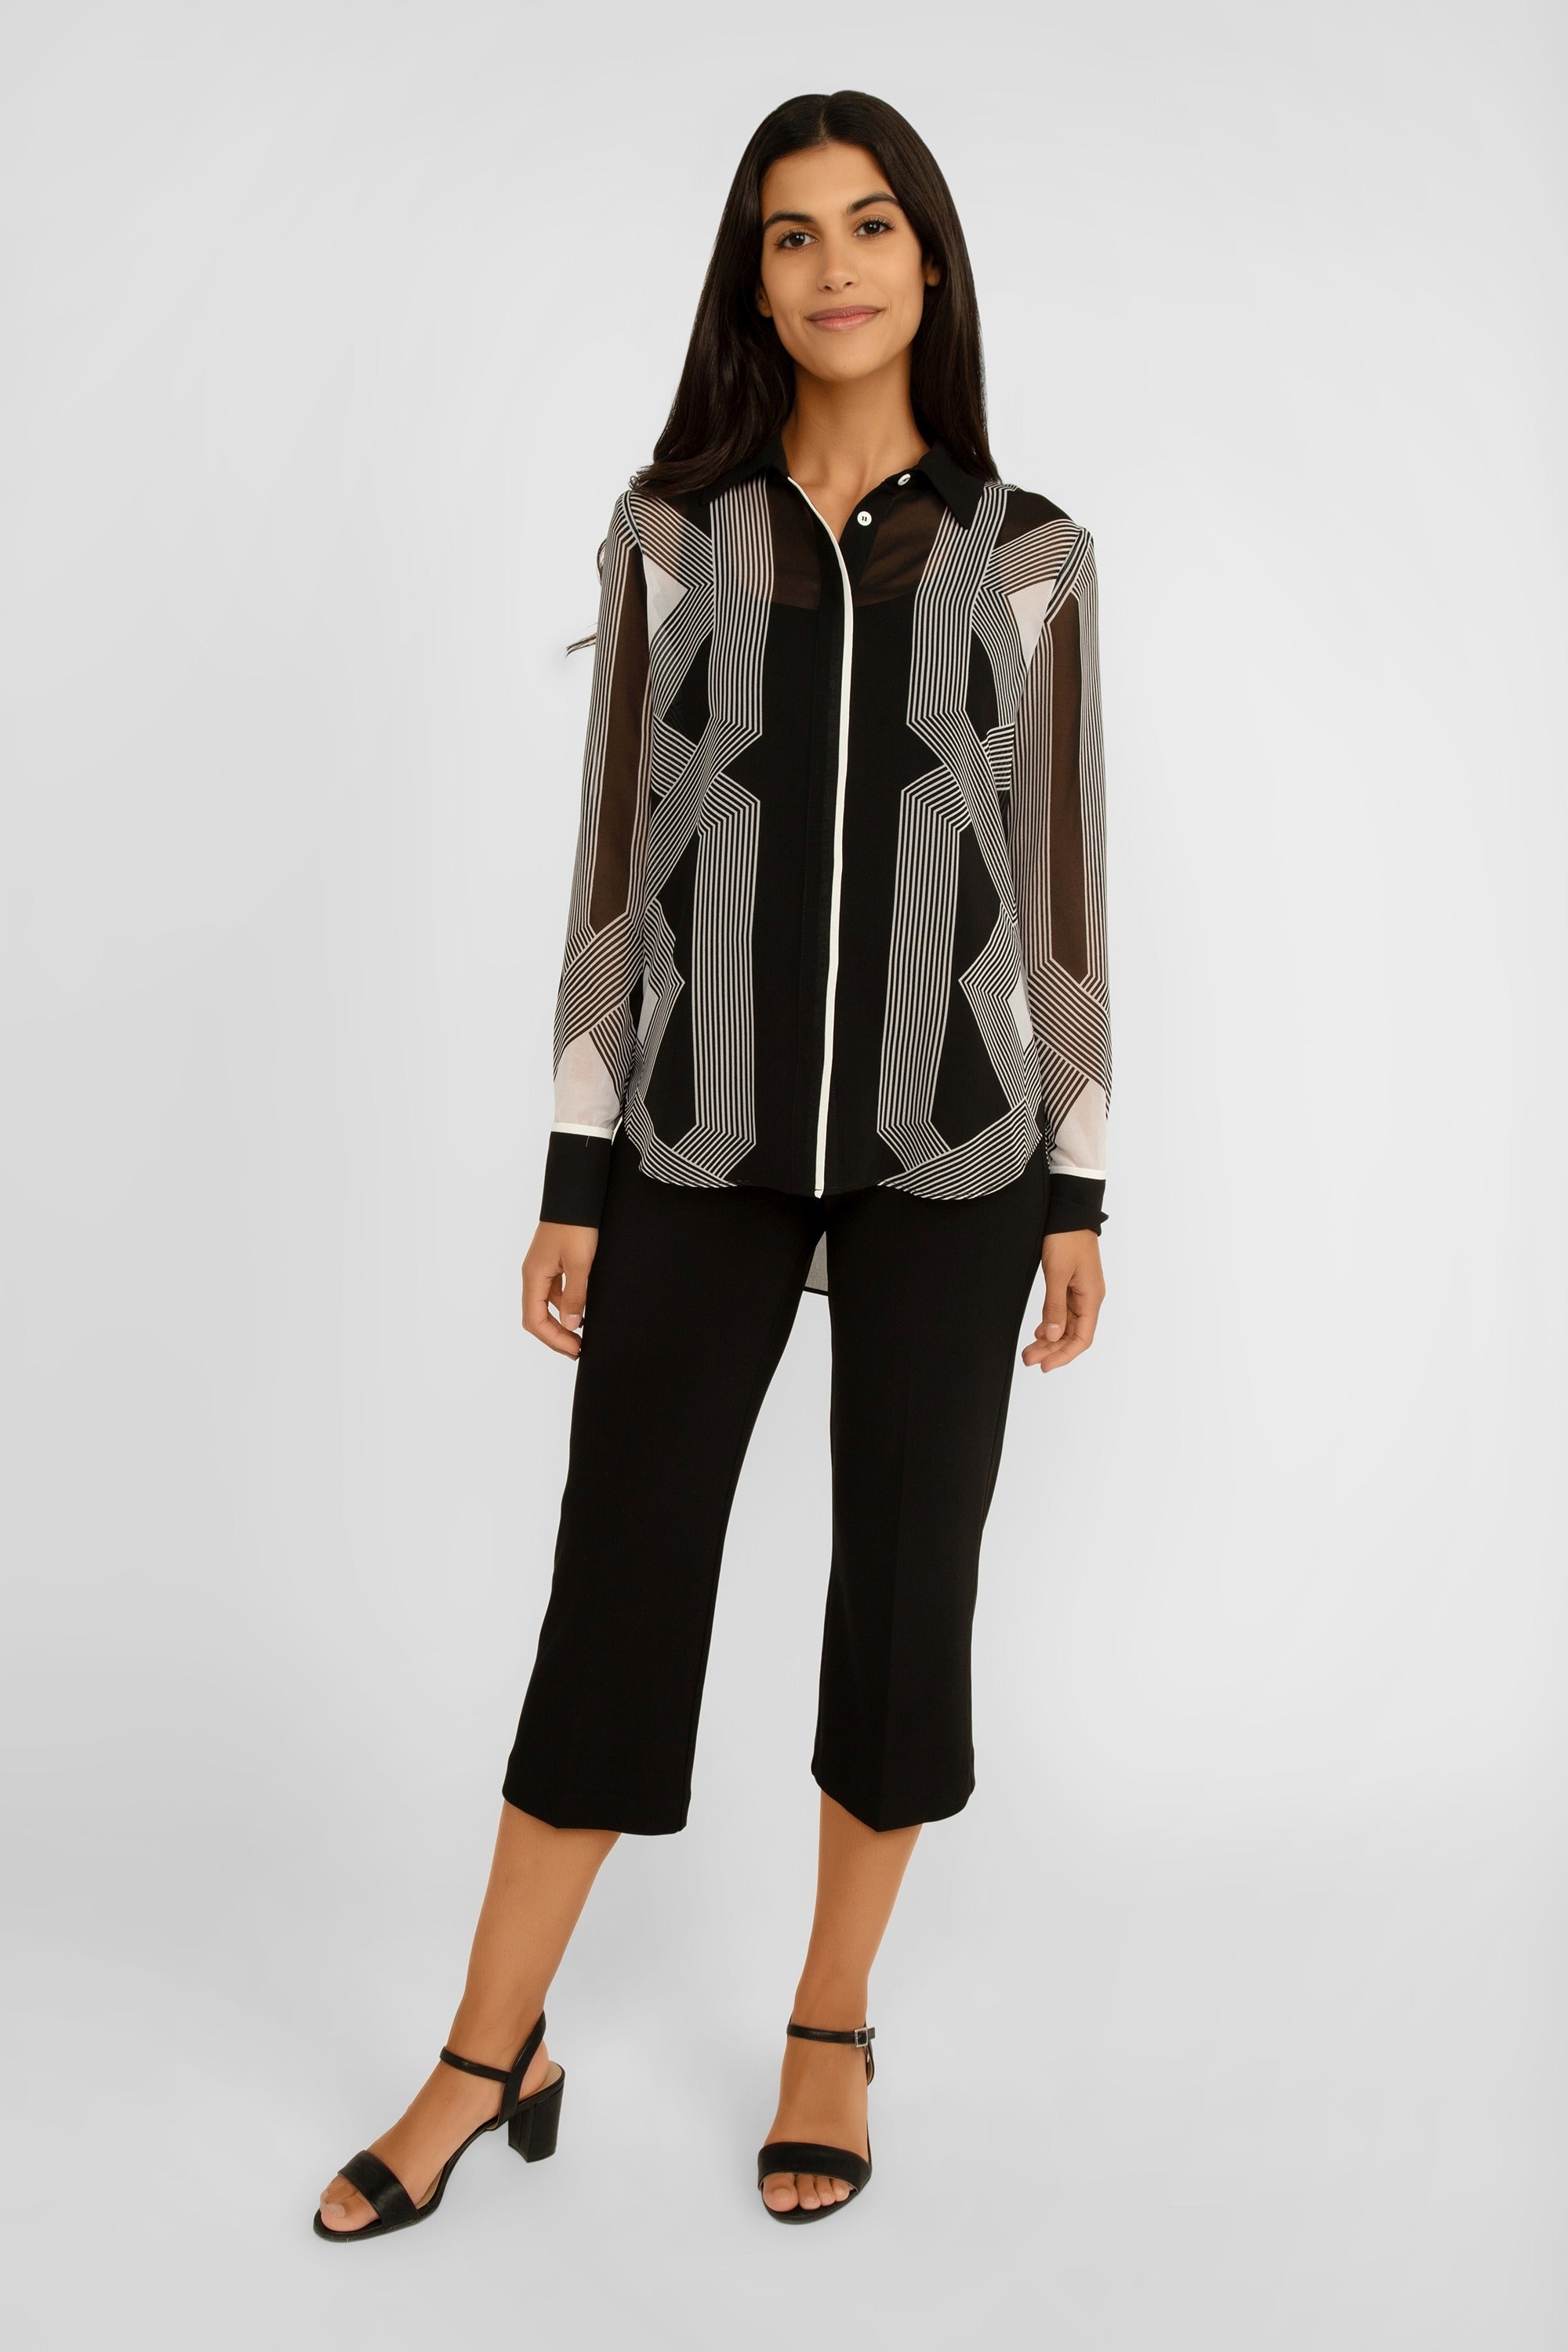 Frank Lyman (246453) Women's Long Sleeve Sheer Geometric Button Up Blouse in Black & White Geometric Print